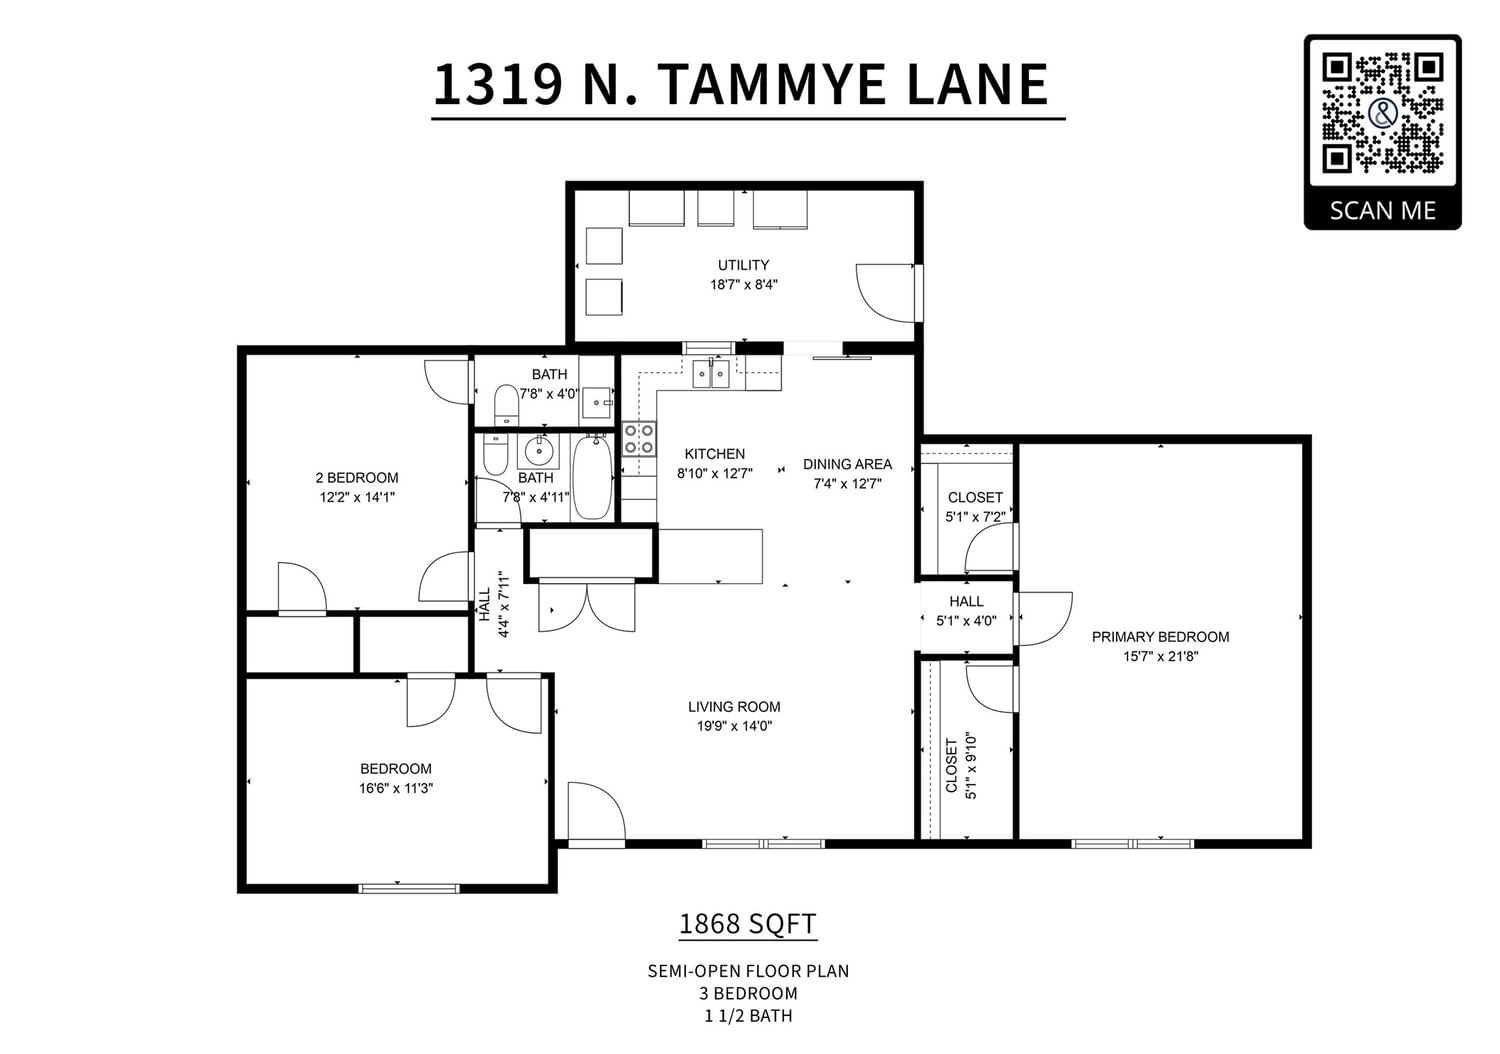 Real estate property located at 1319 Tammye, Madison, Madisonville, TX, US